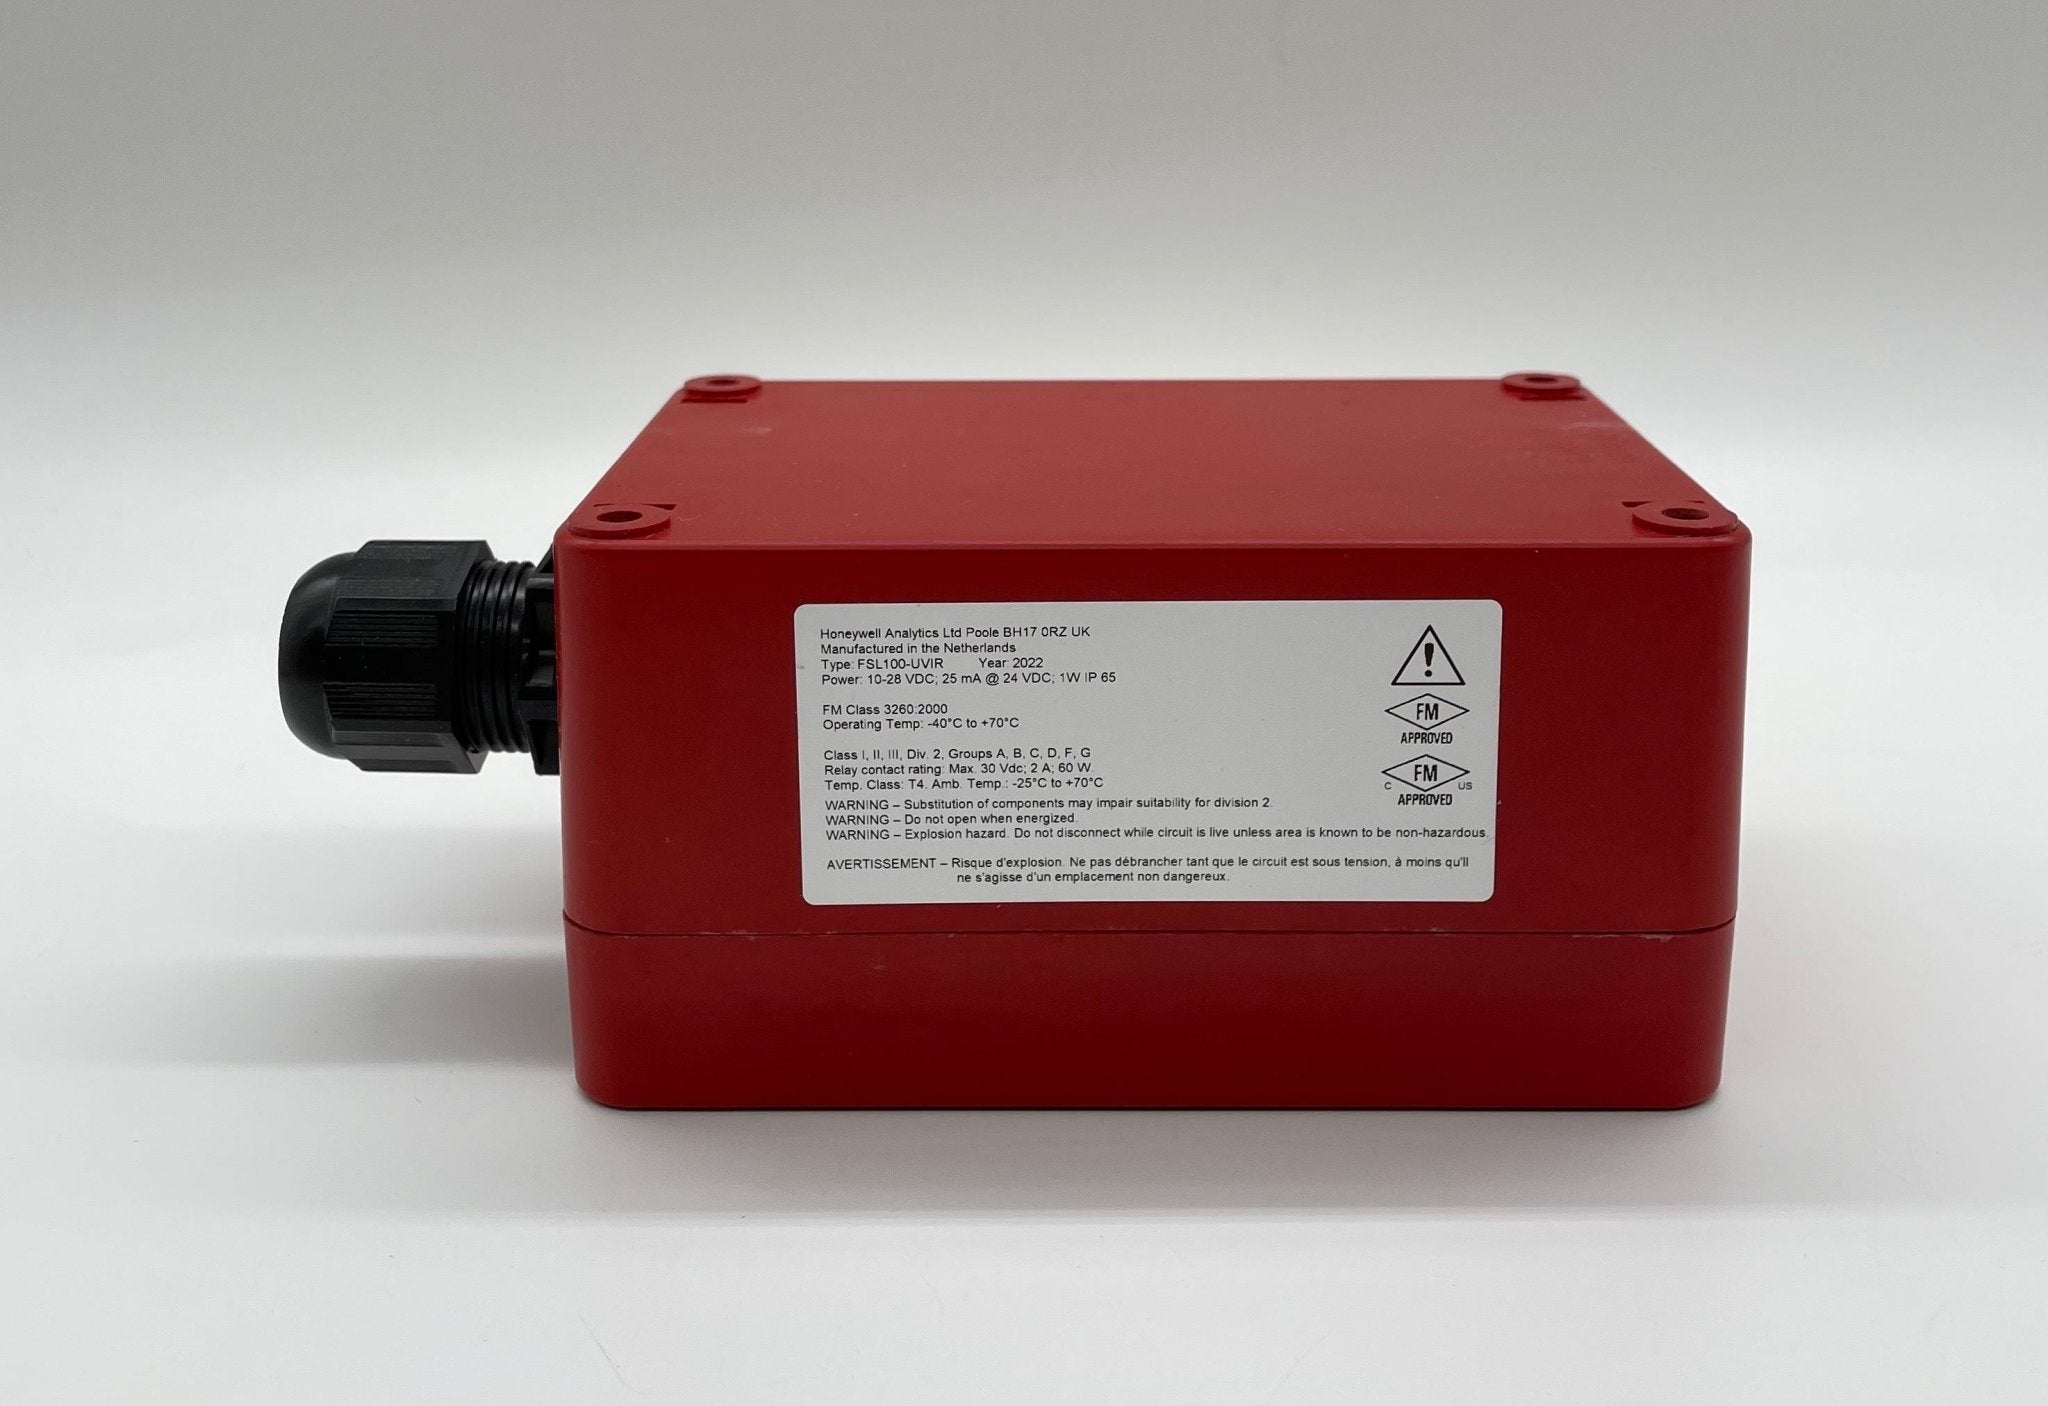 Honeywell FSL100-UVIR Flame Detector - The Fire Alarm Supplier